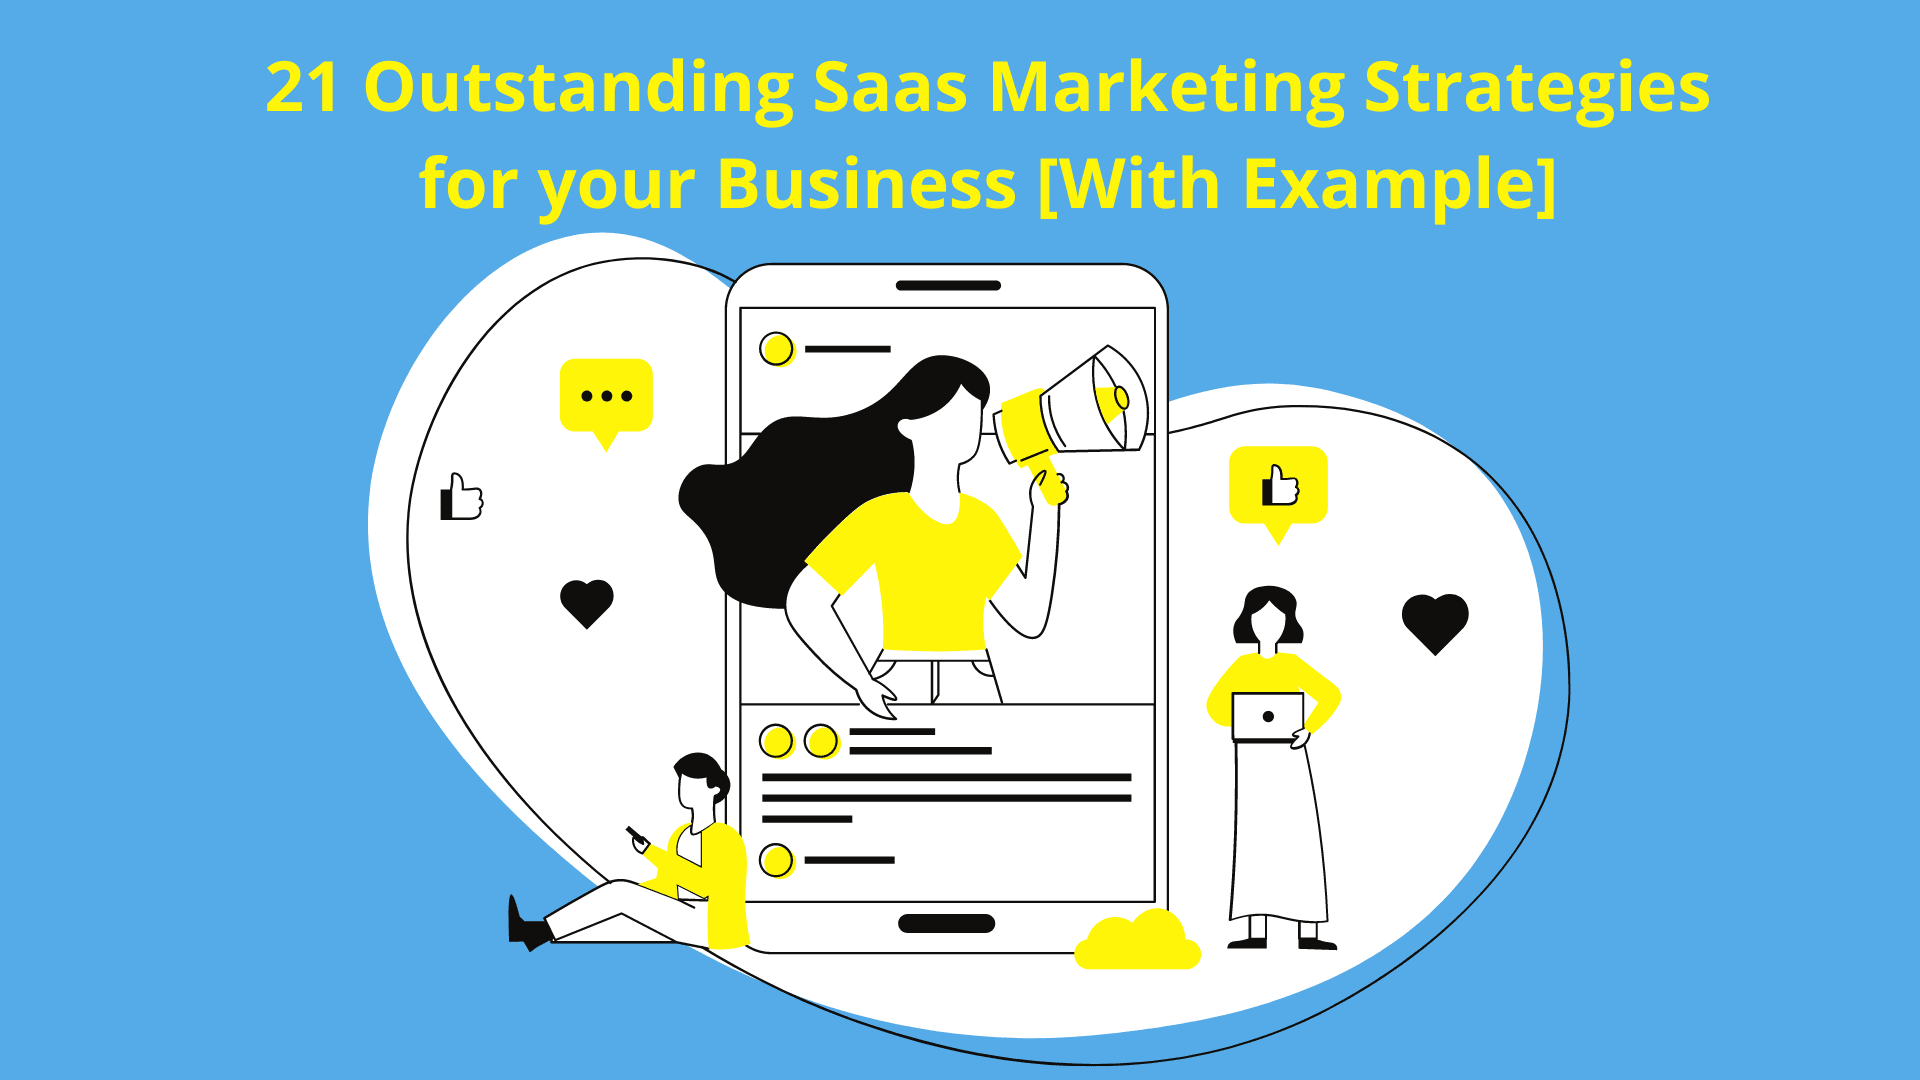 Saas Marketing strategies with example